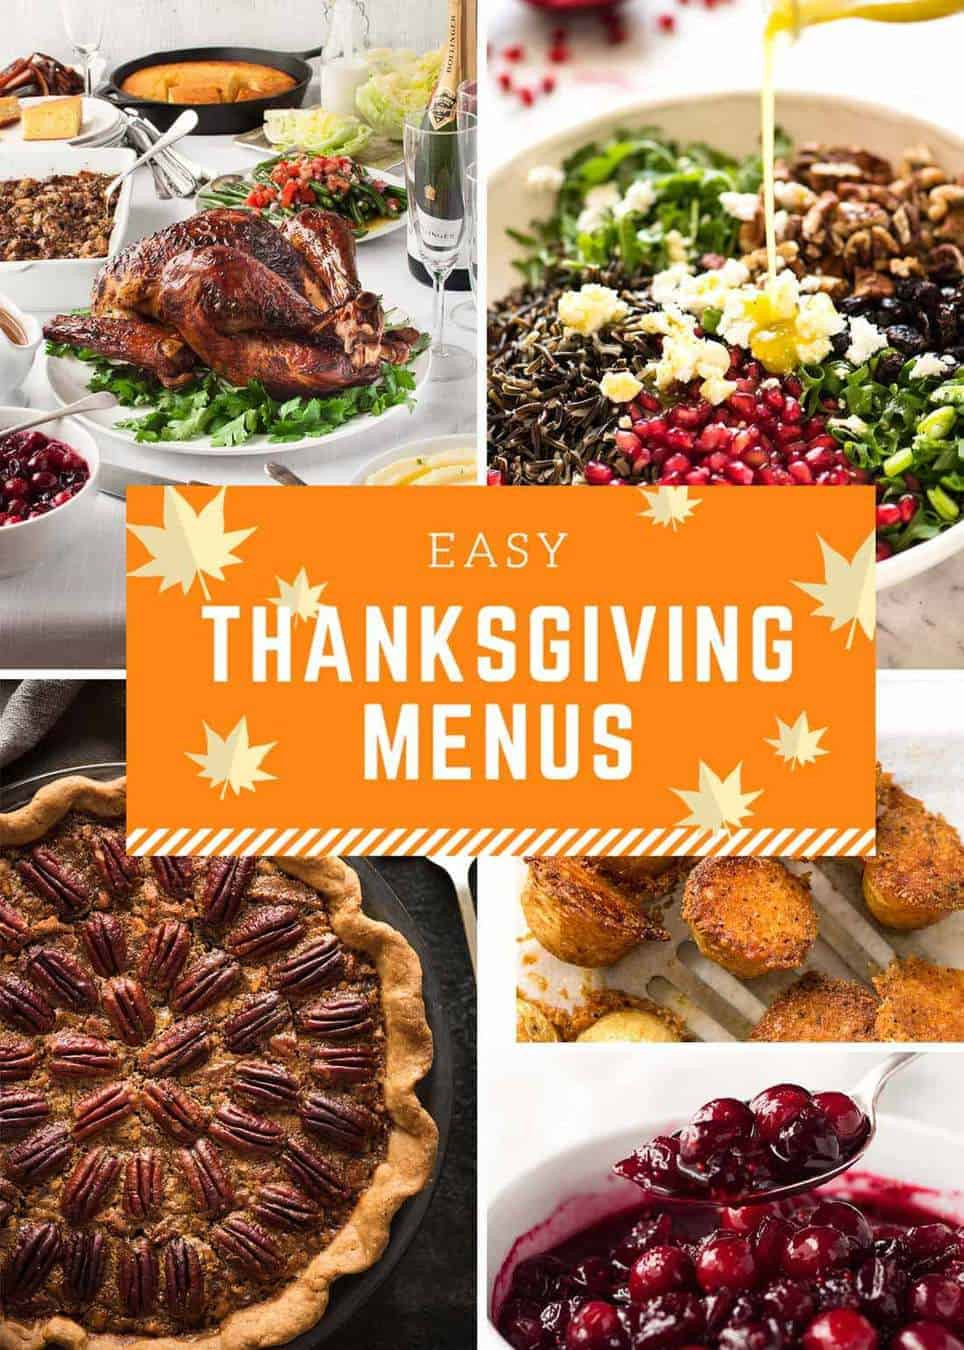 Thanksgiving Breakfast Menu Ideas
 Easy Thanksgiving Menus